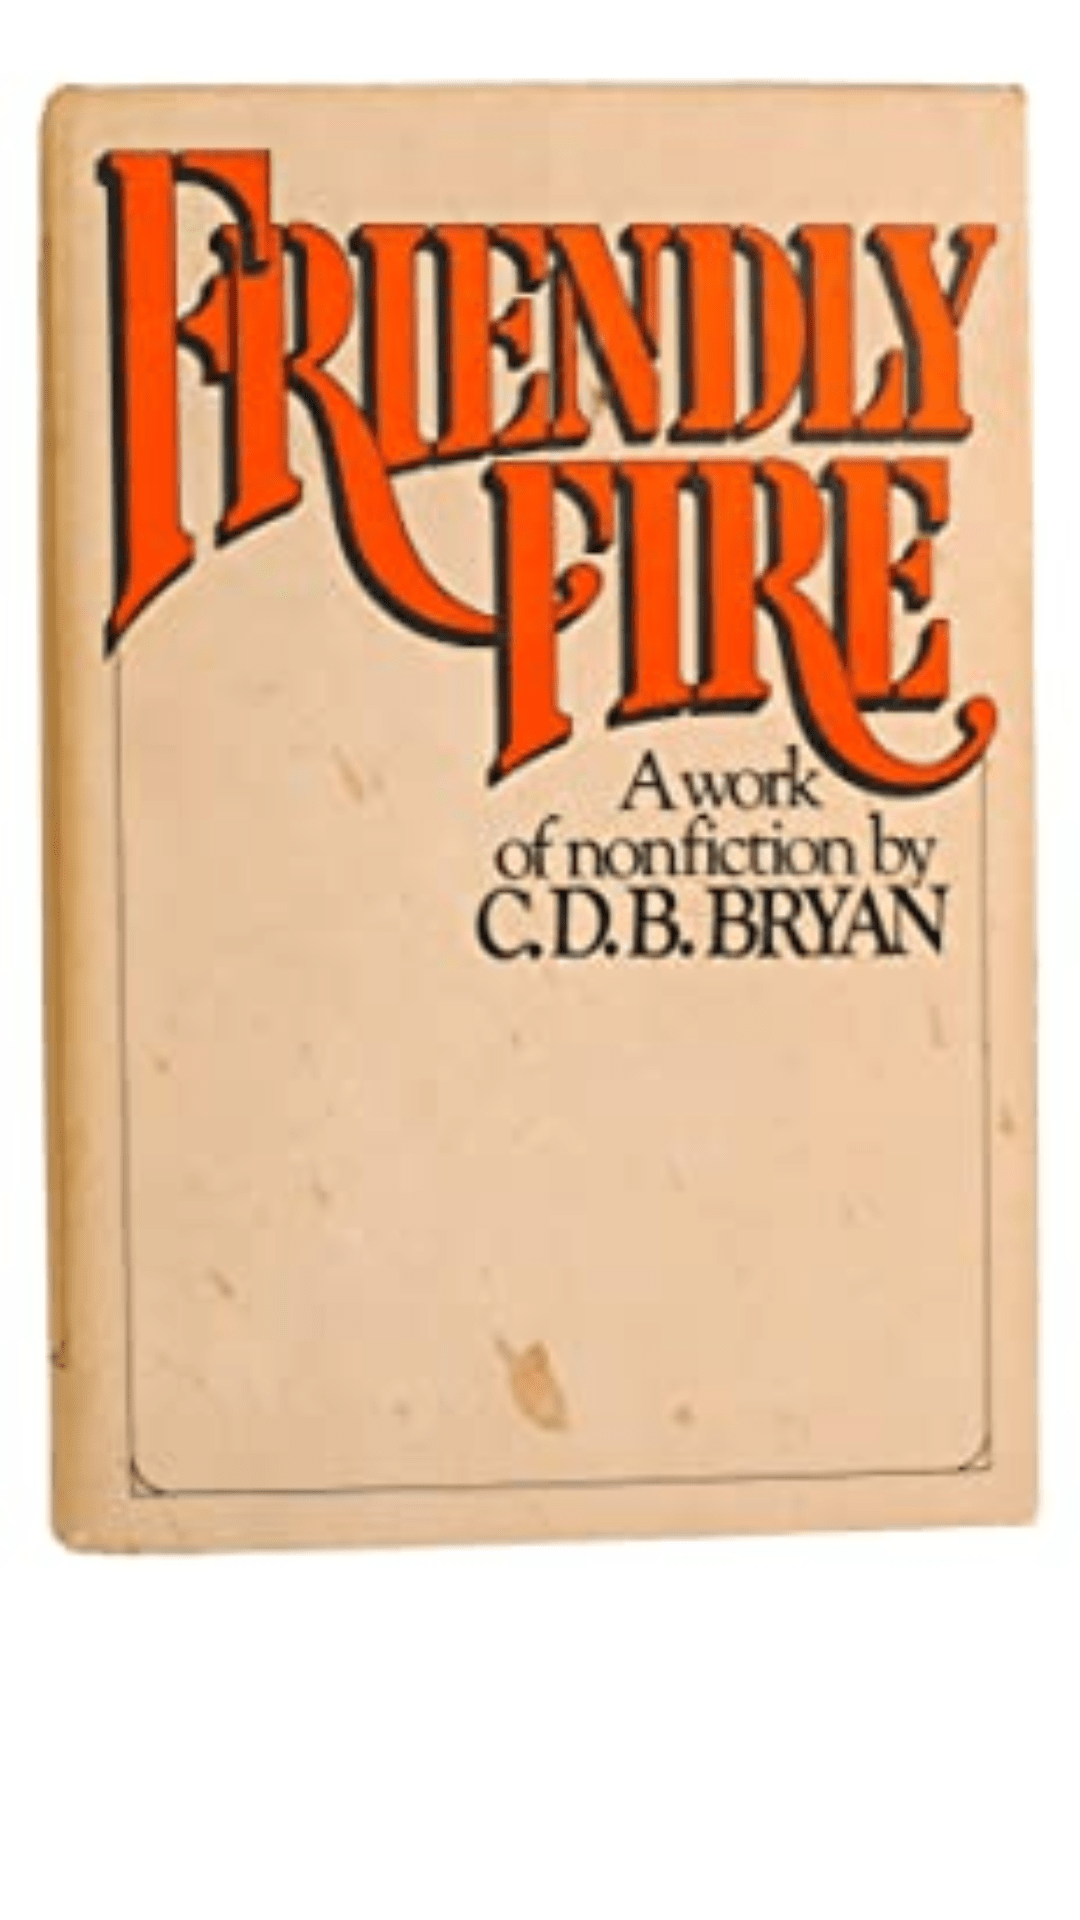 Friendly Fire by C.D.B. Bryan